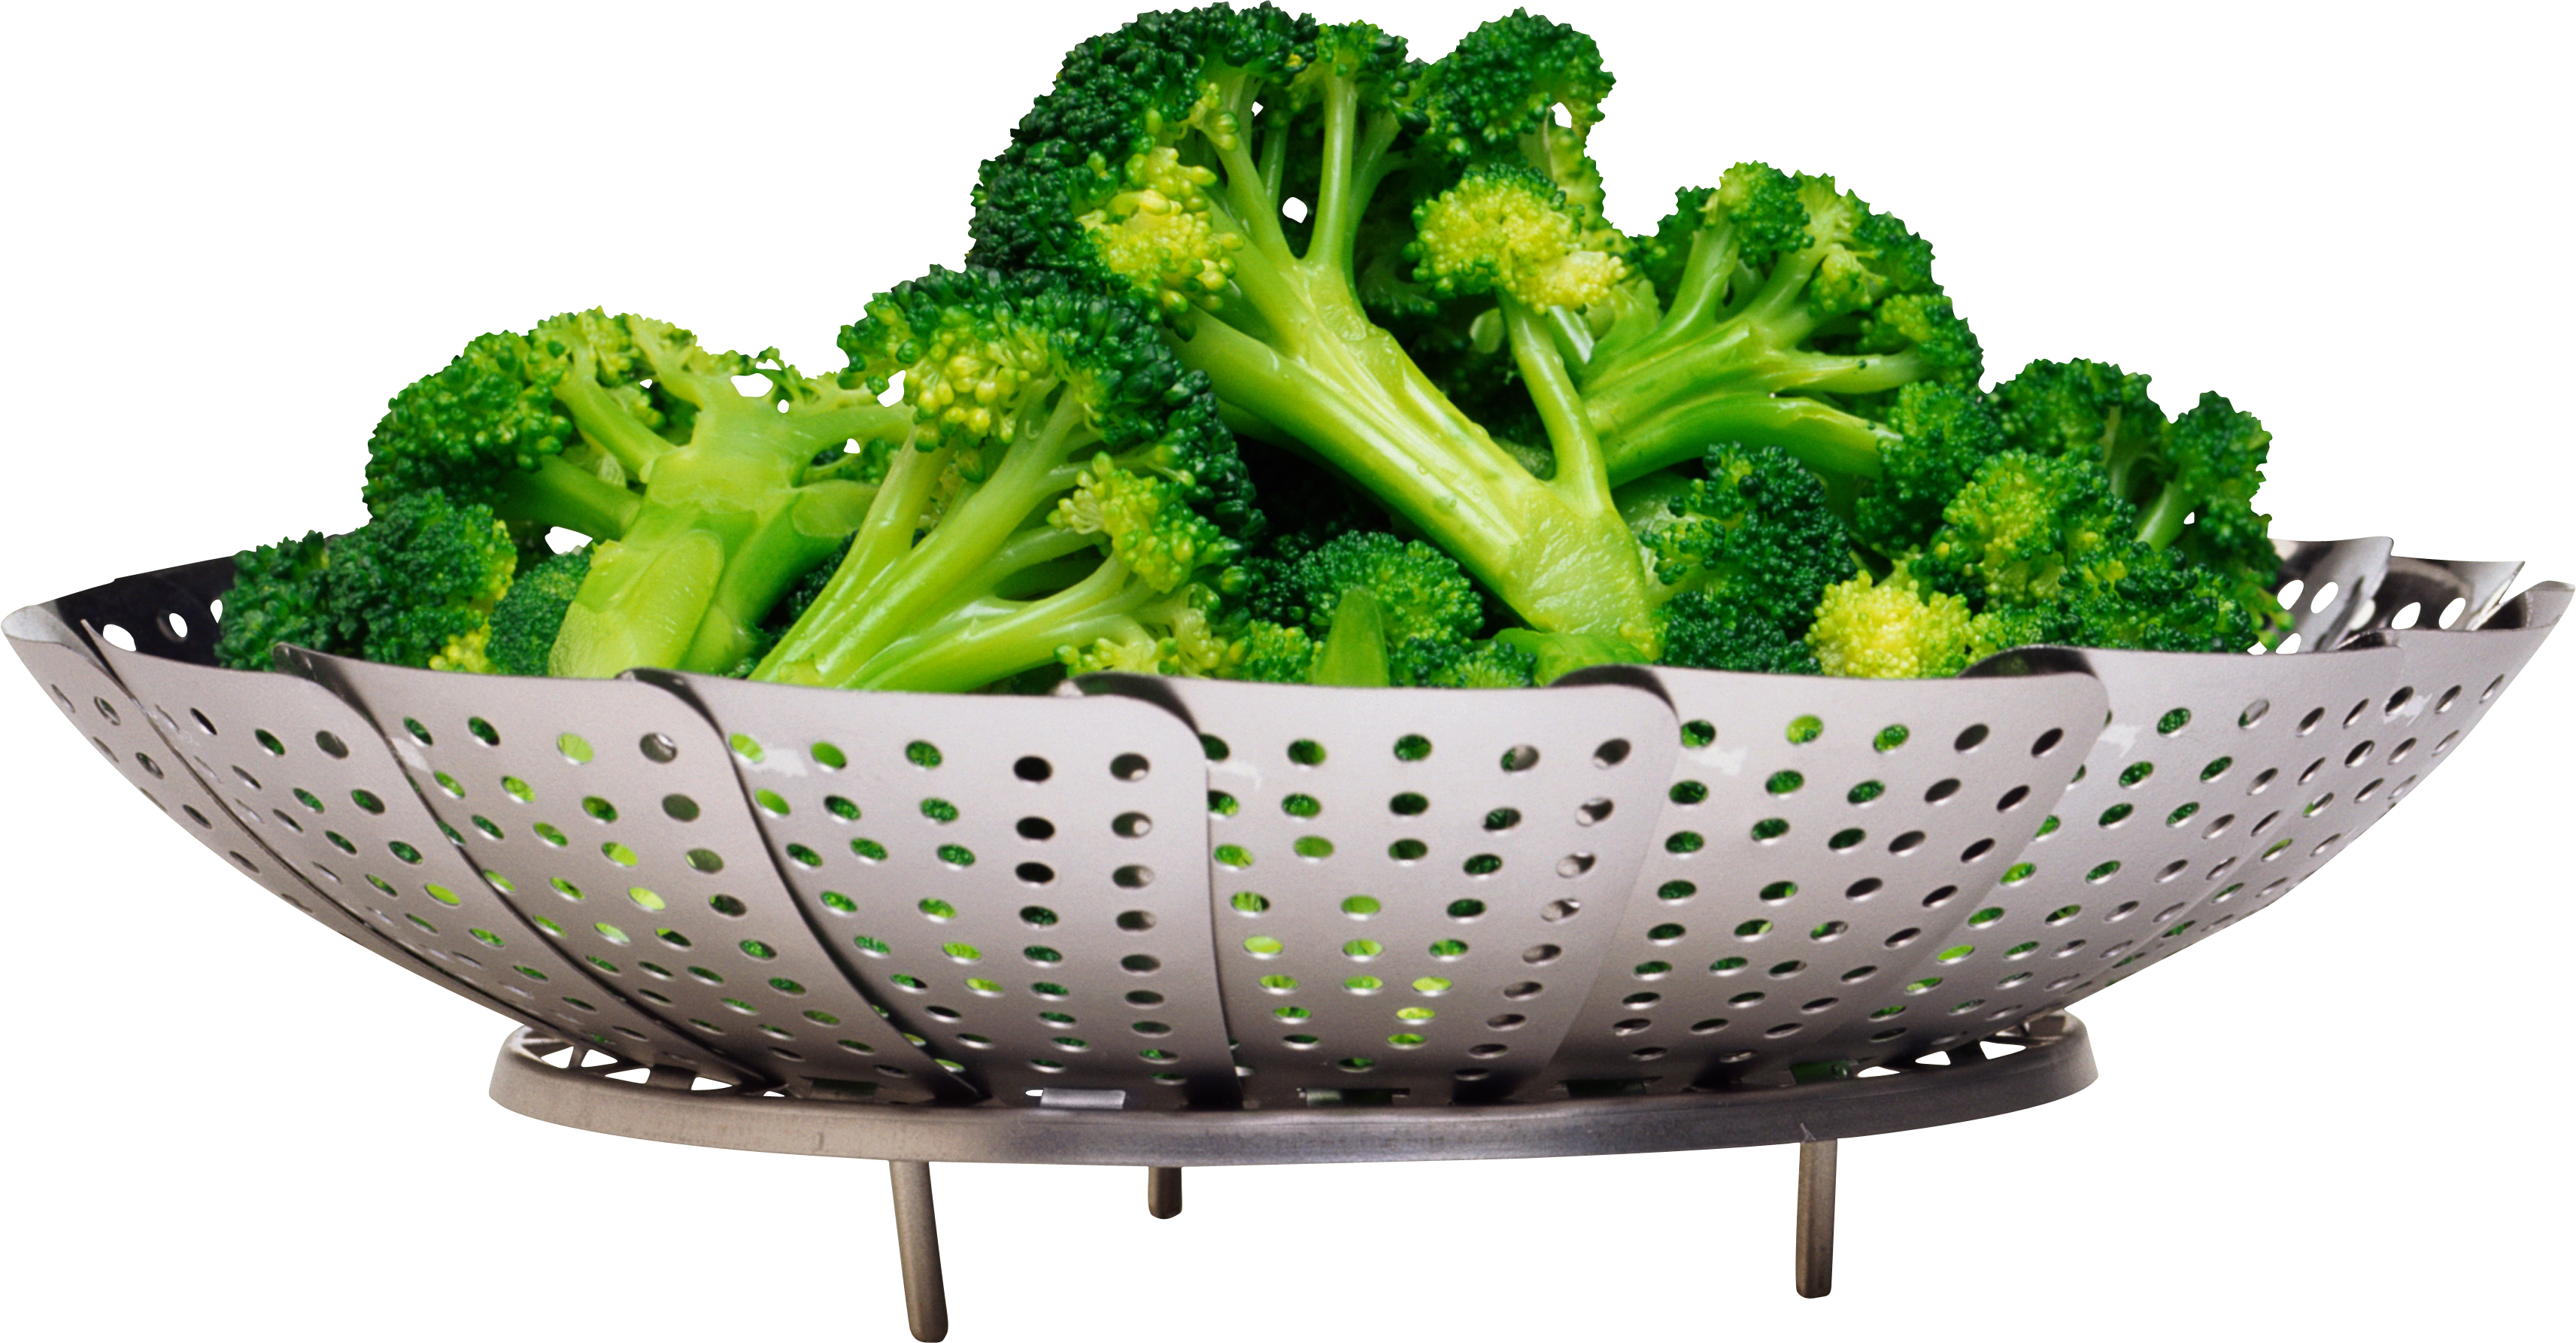 Salad Brokoli